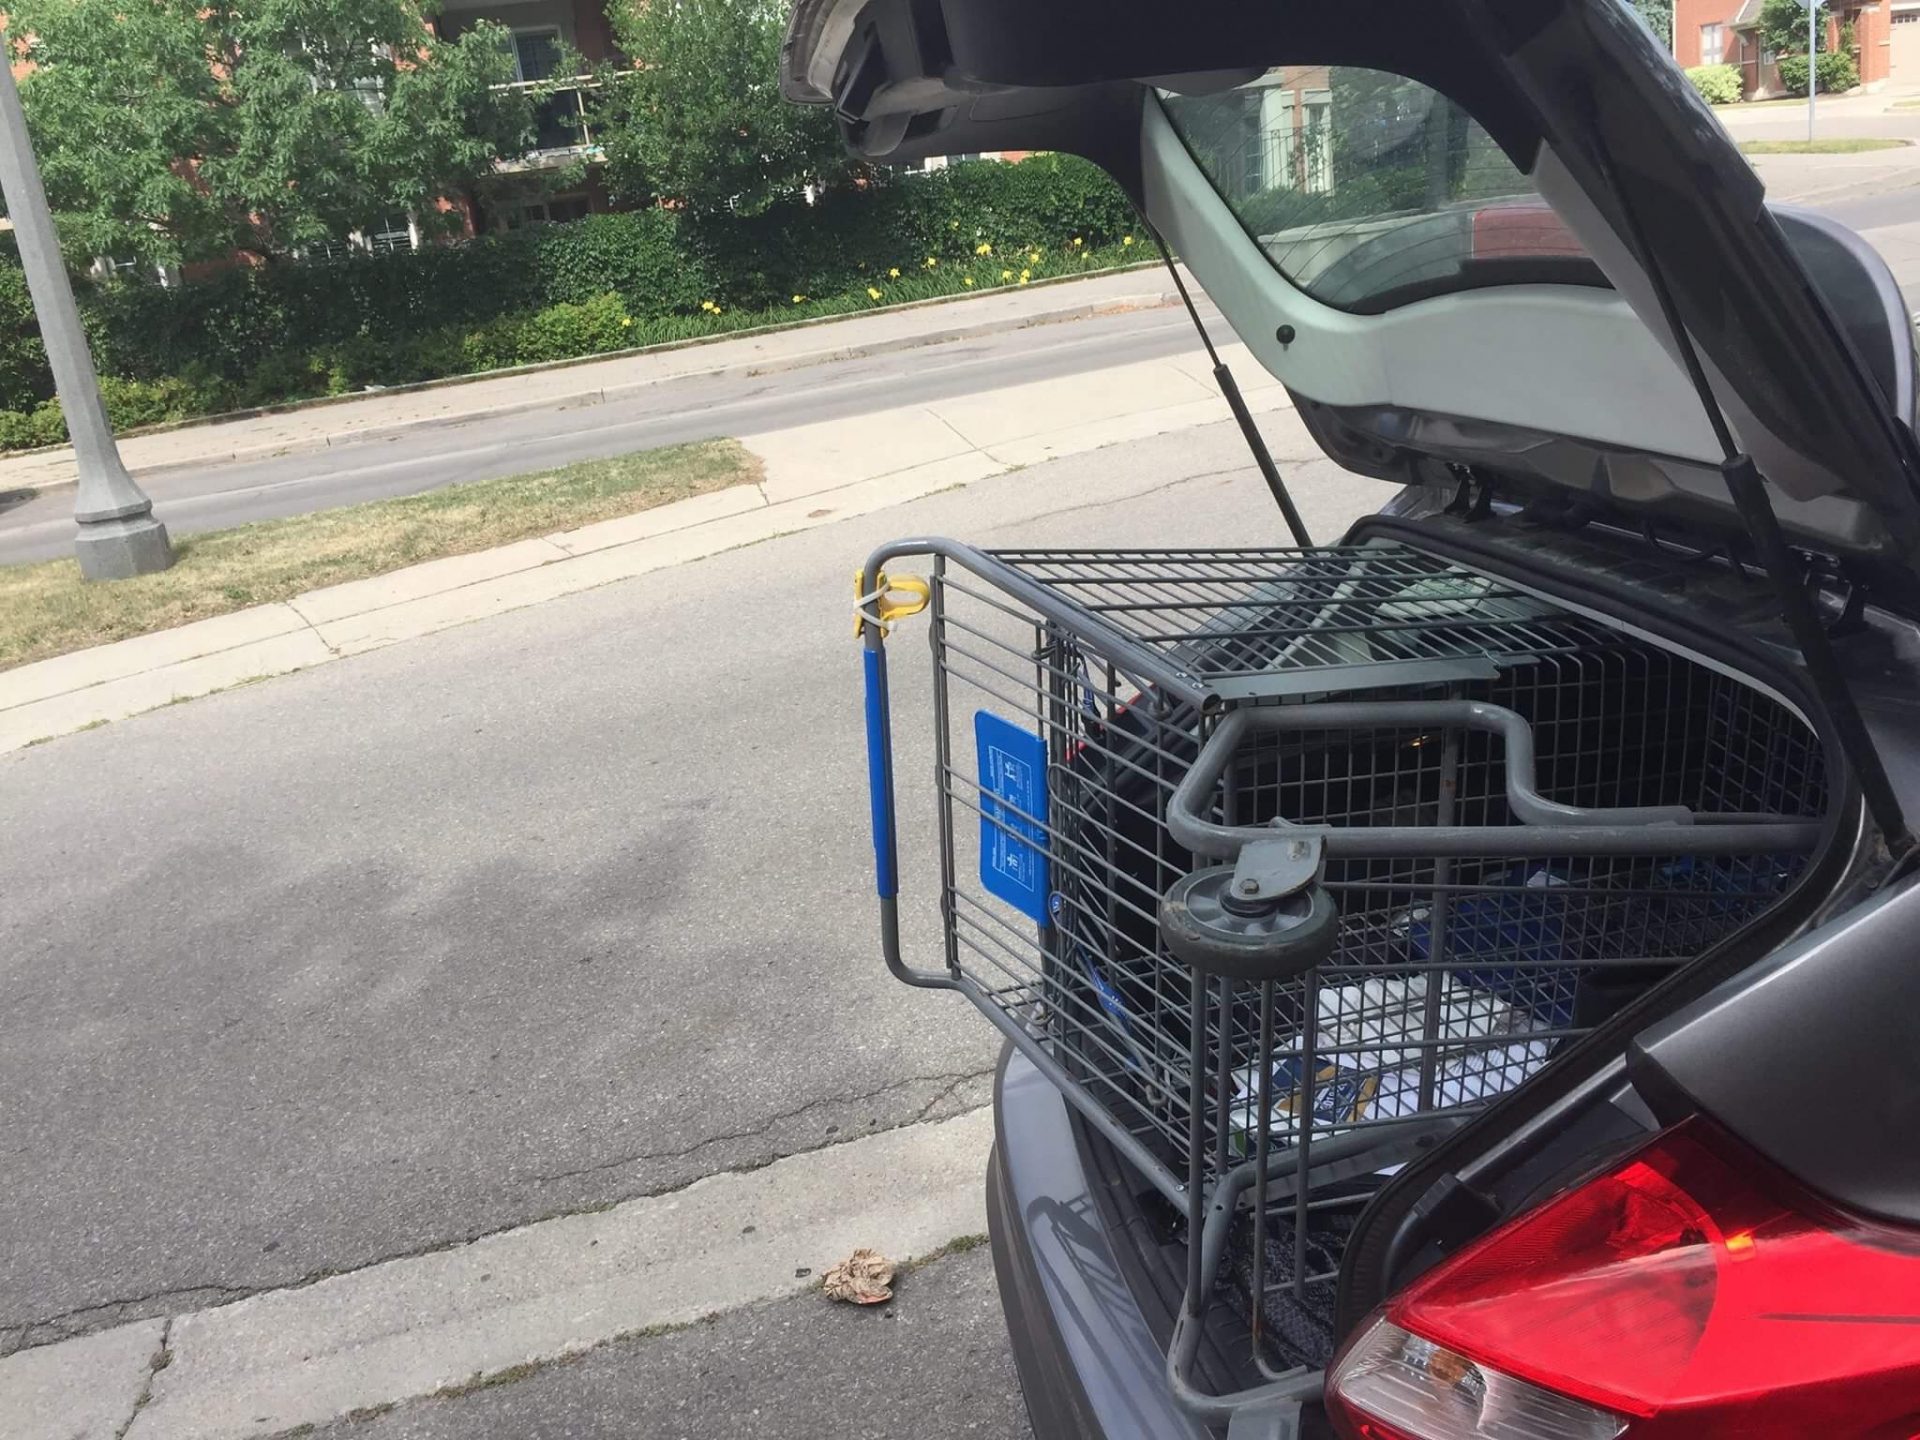 Marc Grant, shopping cart in car